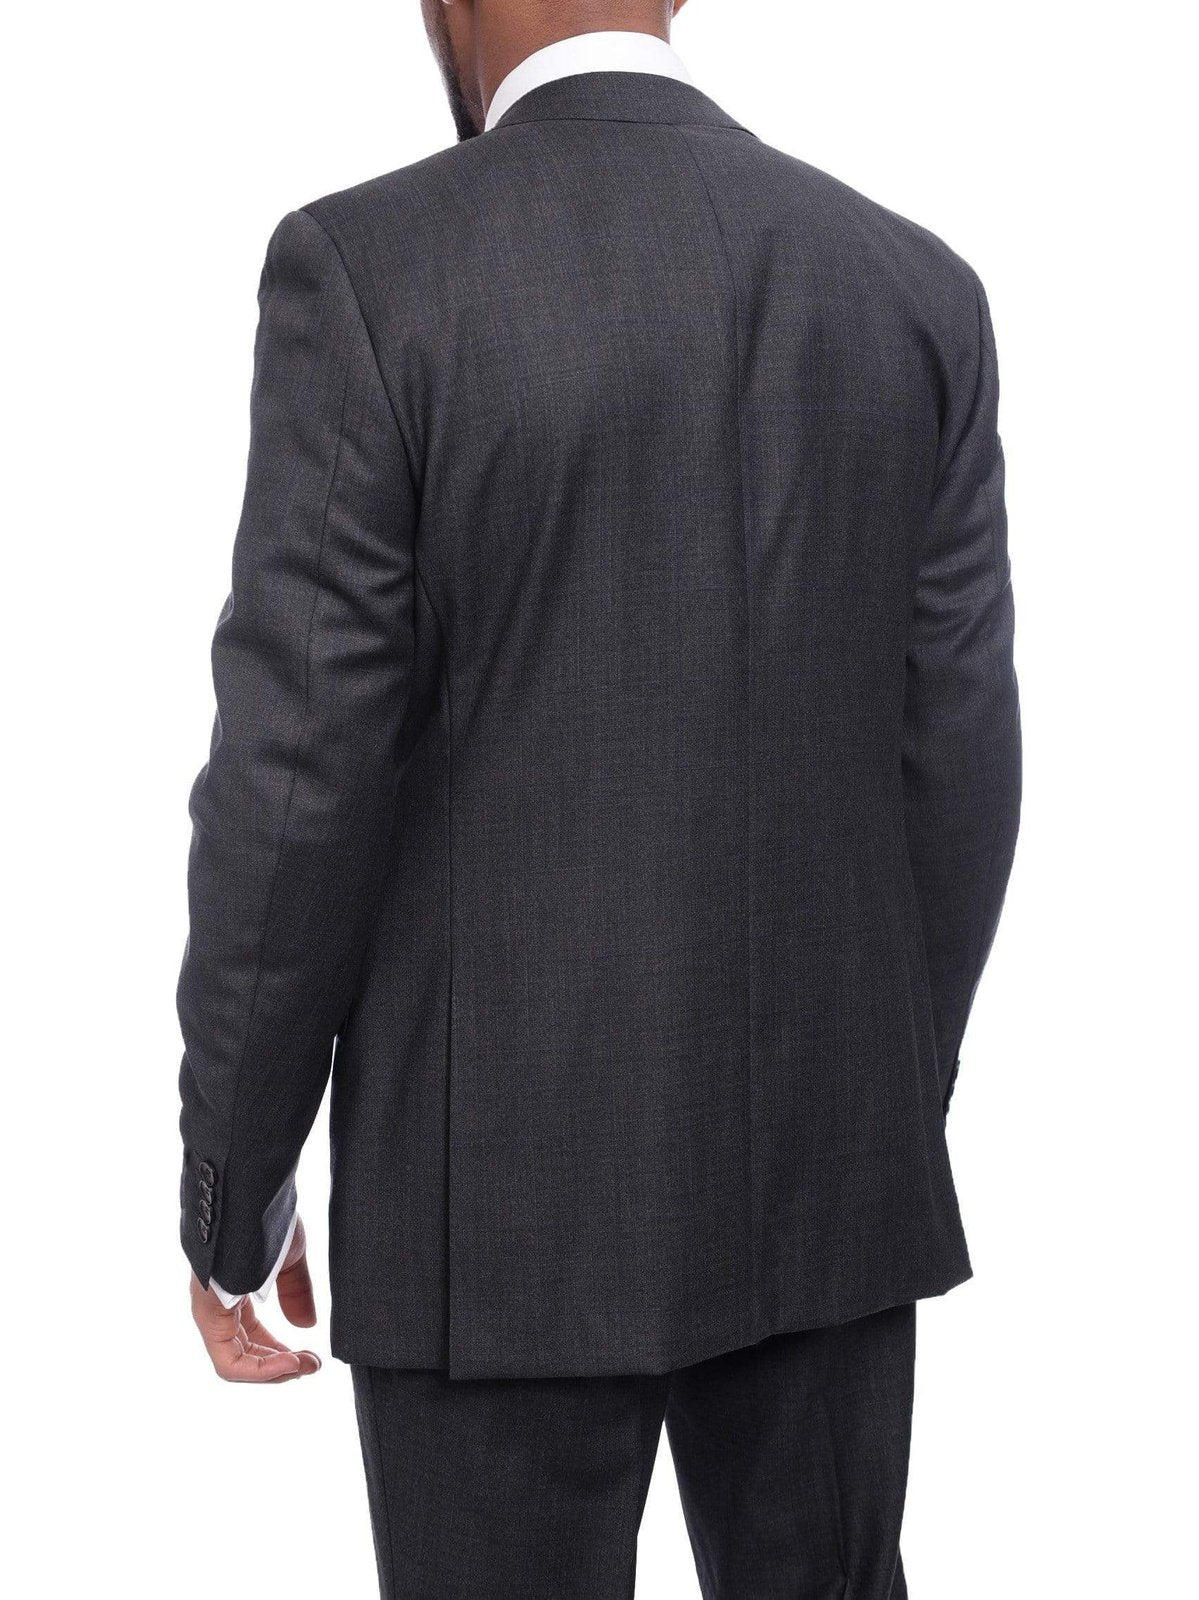 Napoli Men&#39;s Napoli Slim Fit Gray Windowpane Plaid Super 150s 100% Italian Wool Suit